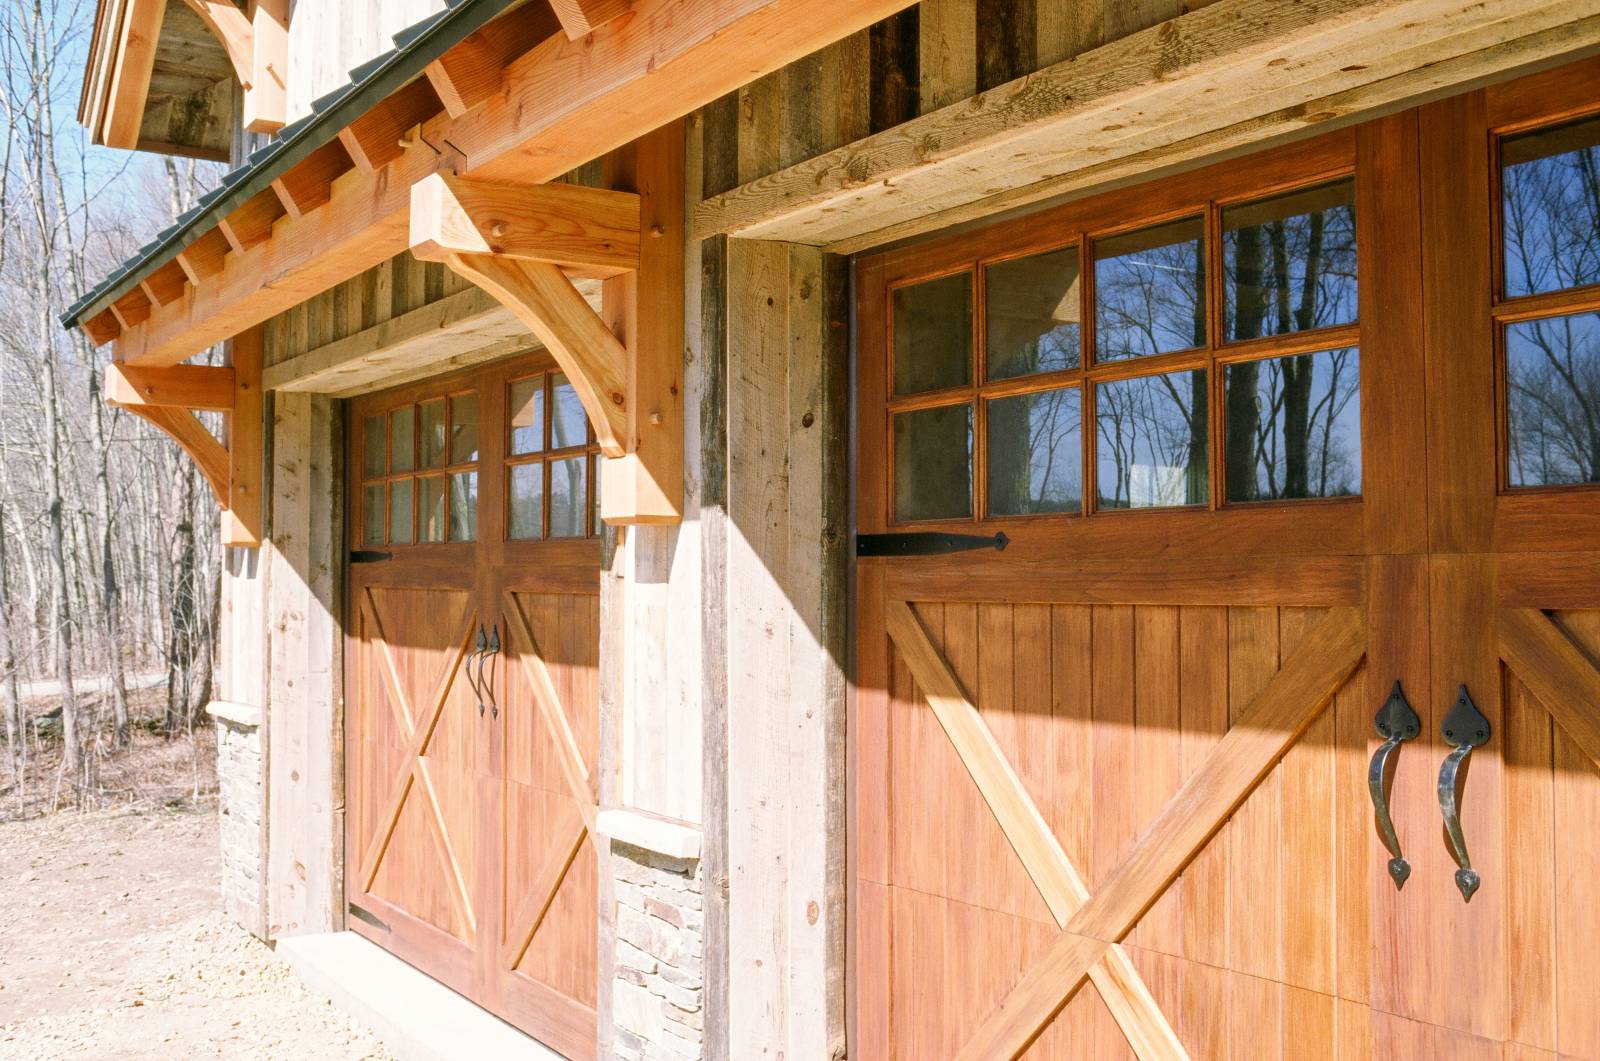 Spanish Cedar Overhead Doors with Douglas Fir Timber Frame Eyebrow Roof